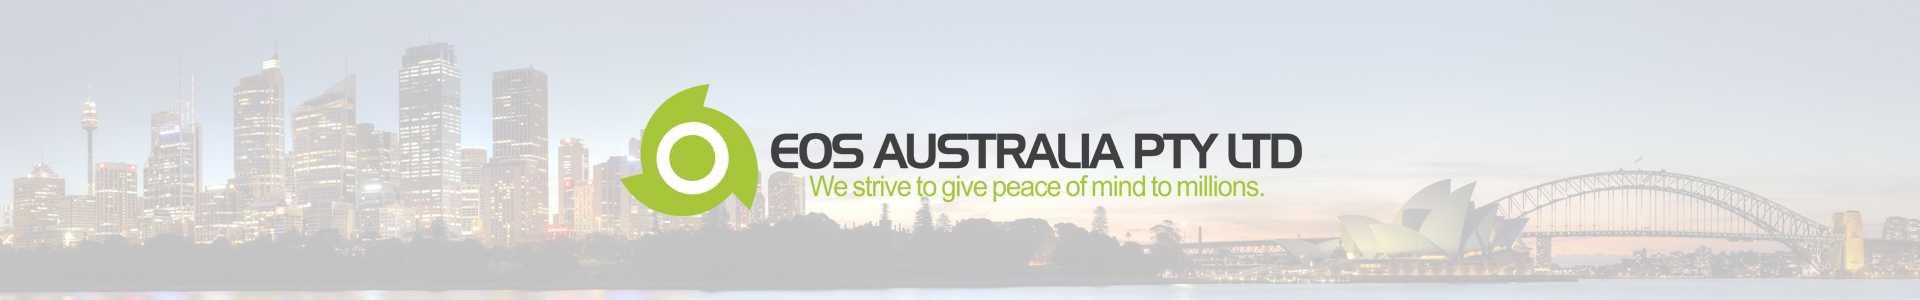 EOS Australia Banner image